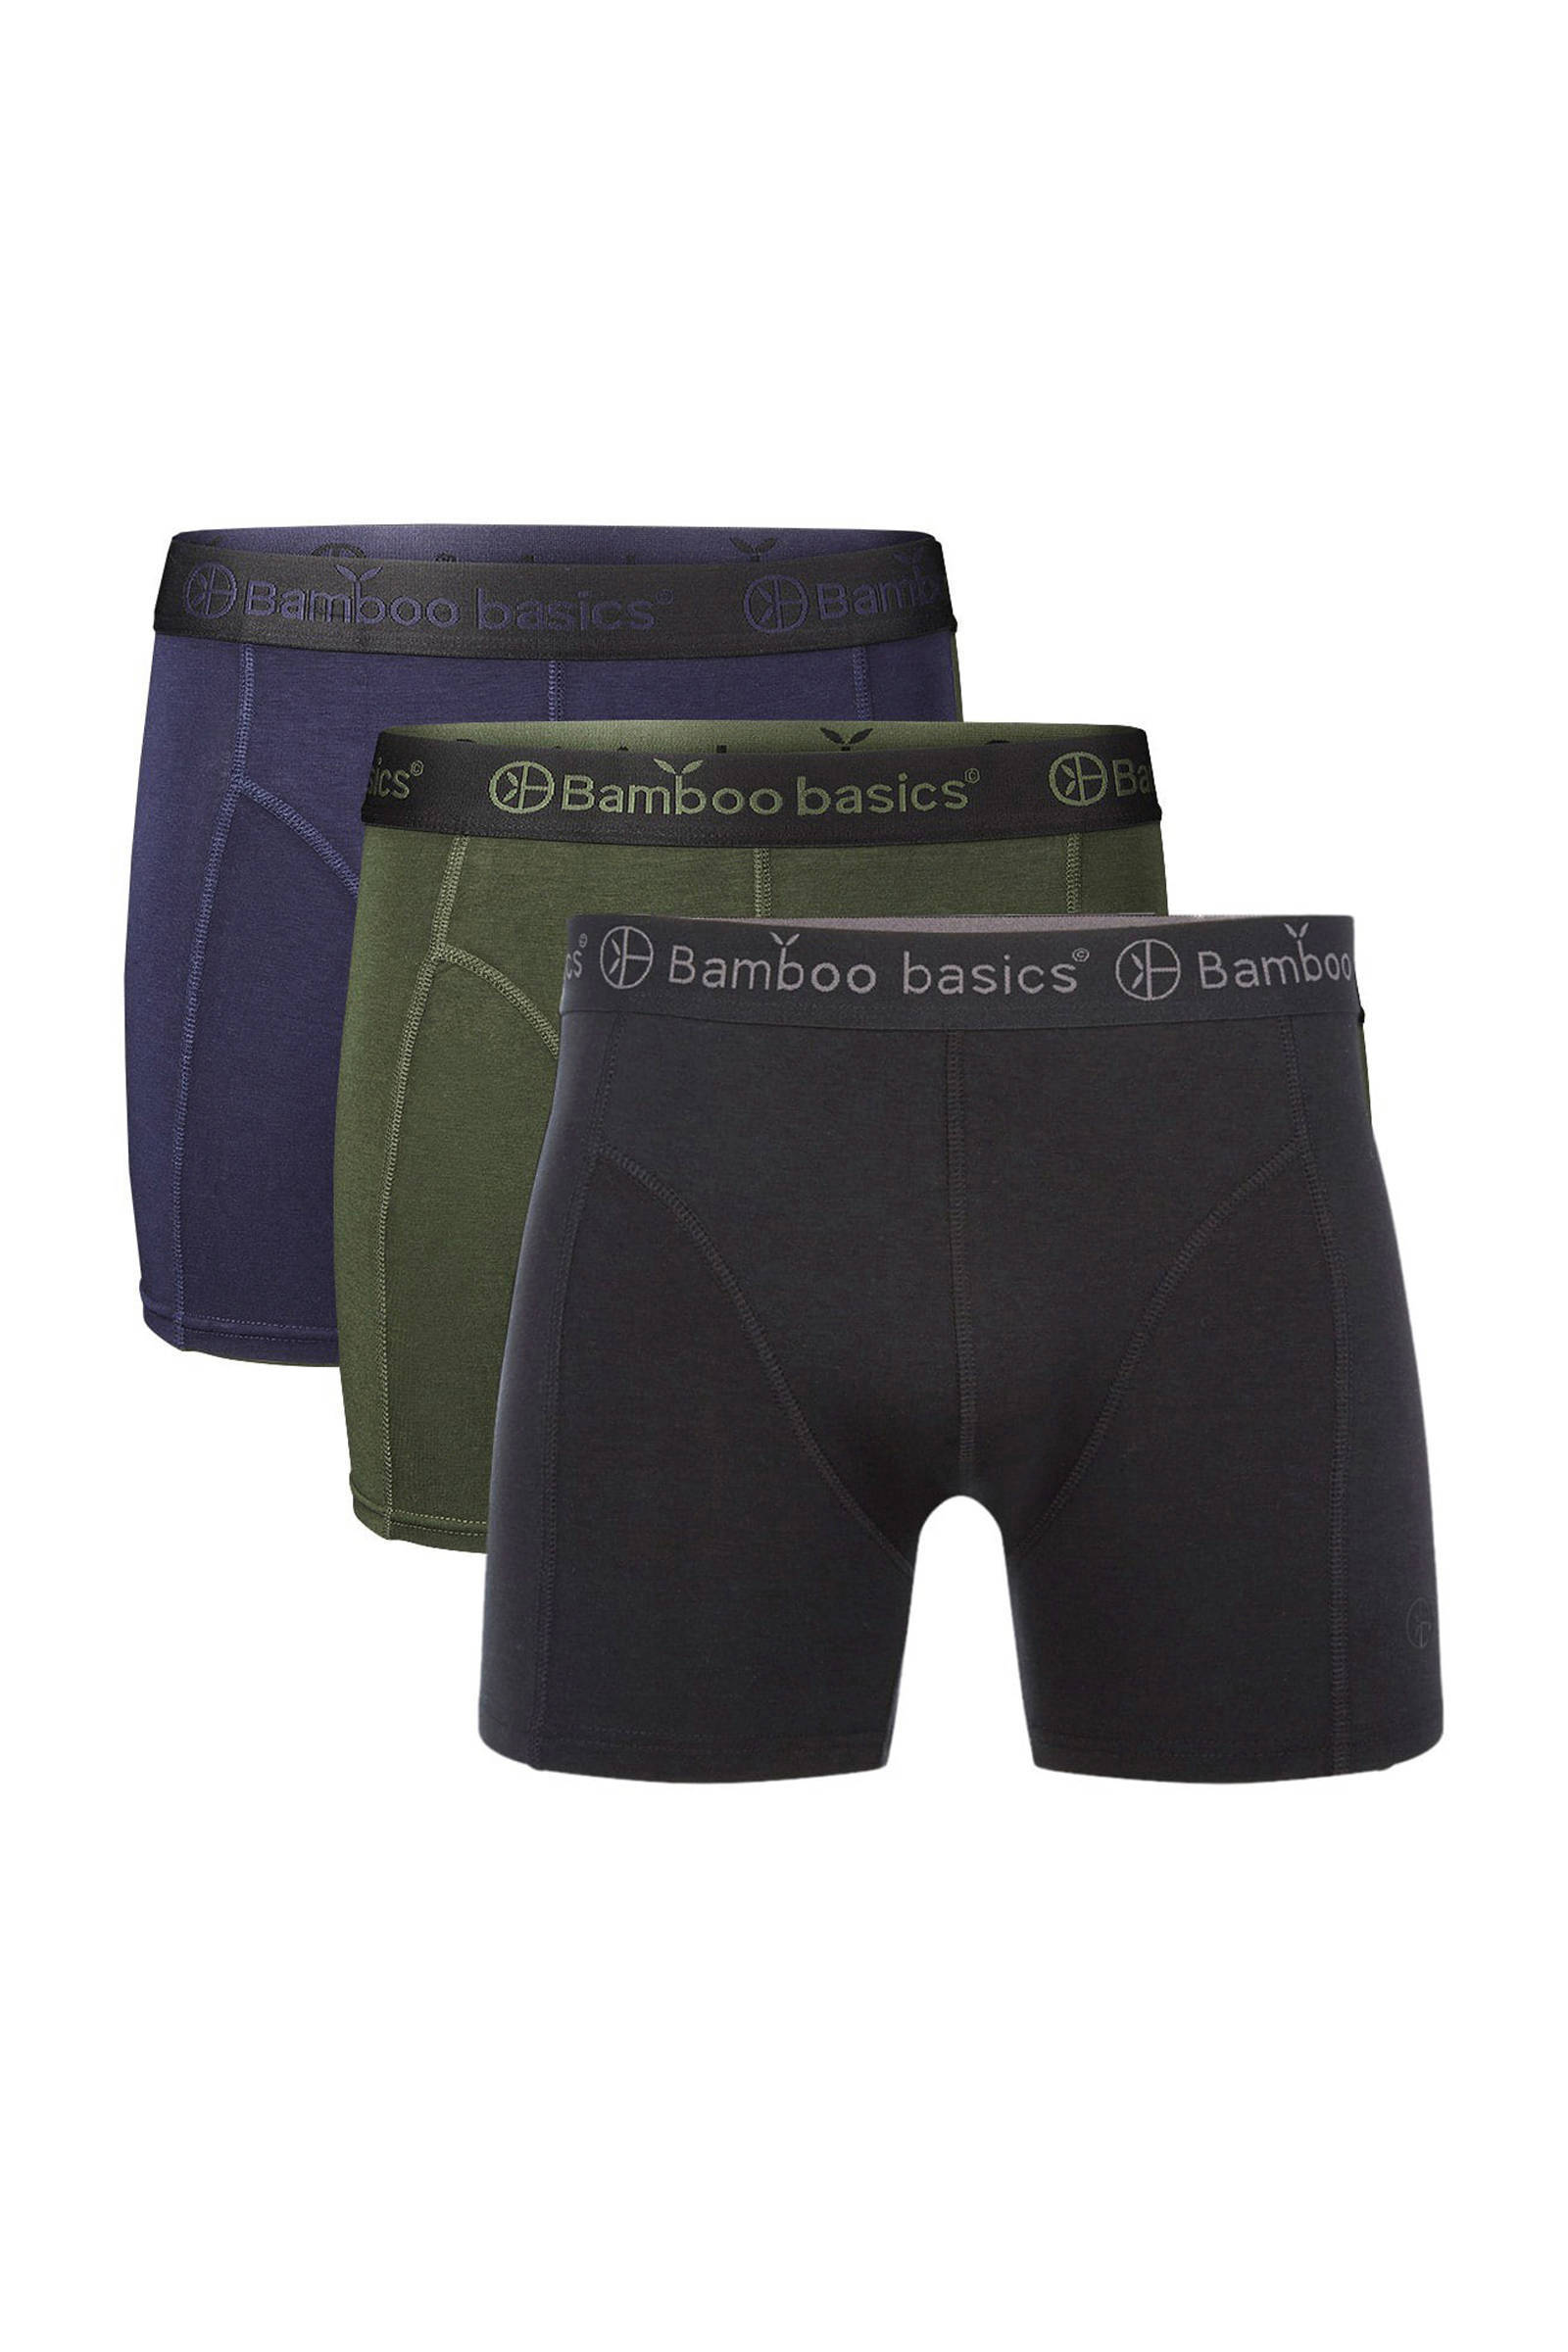 Bamboo Basics Boxershorts 3pack bamboo black/navy/army(rico 017 ) online kopen